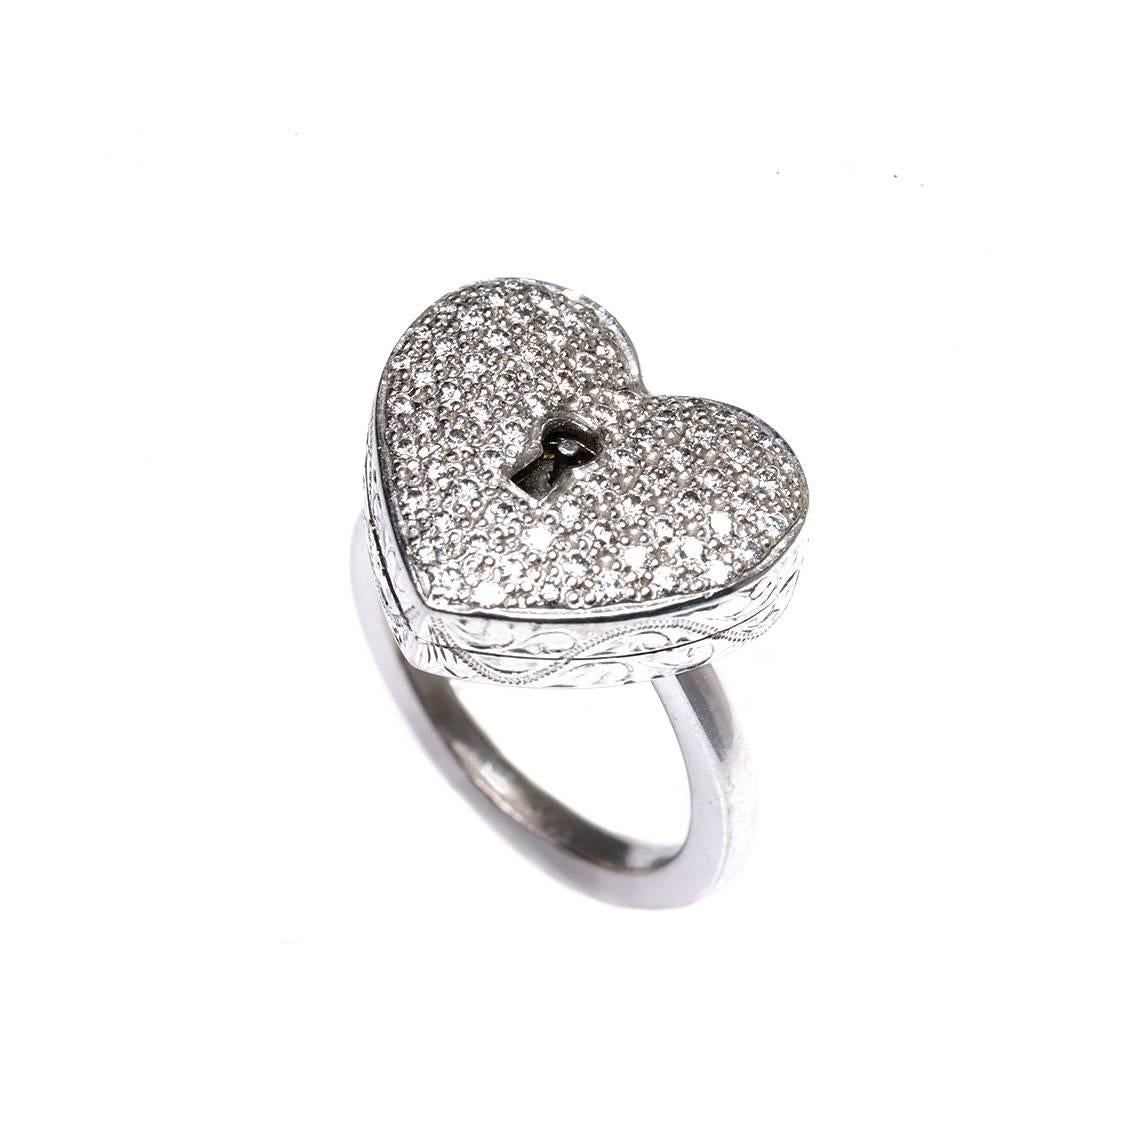 Diamond Heart Locket and Key Victorian Poison Ring in 18 Karat Gold and Diamonds 1